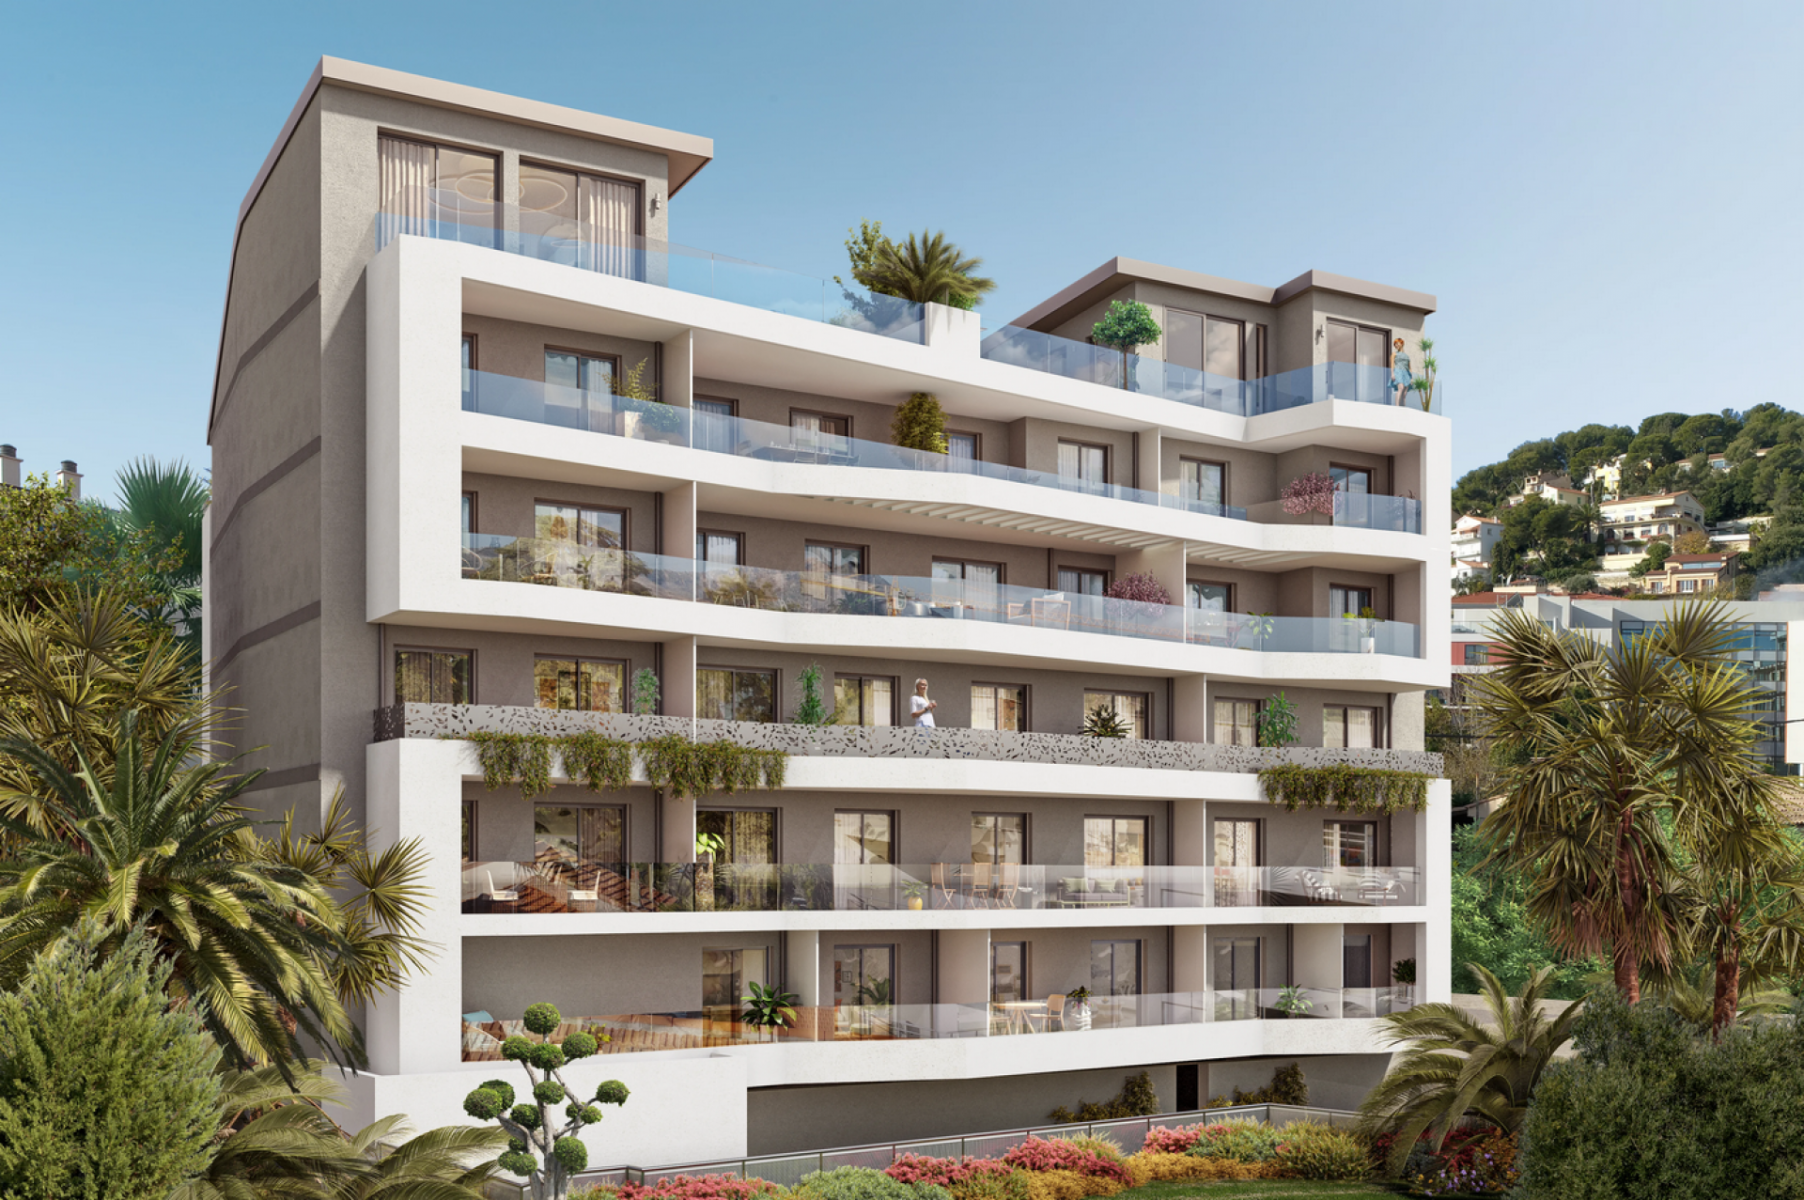 New apartments in new development in Roquebrune-Cap-Martin walking distance to beach